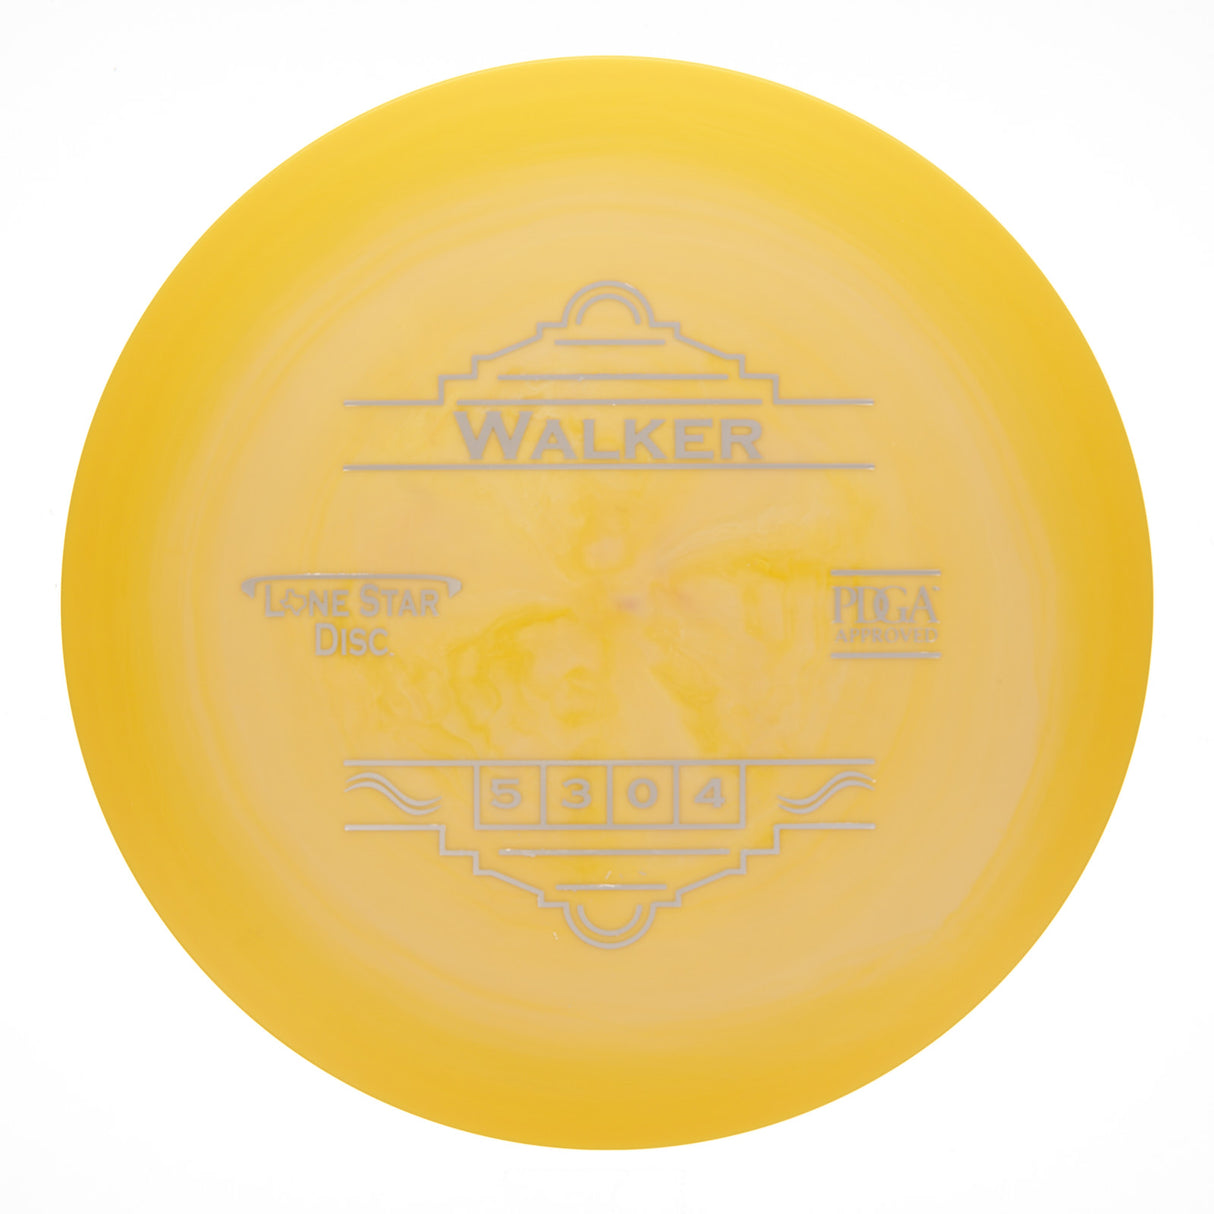 Lone Star Disc Walker - Alpha 169g | Style 0001